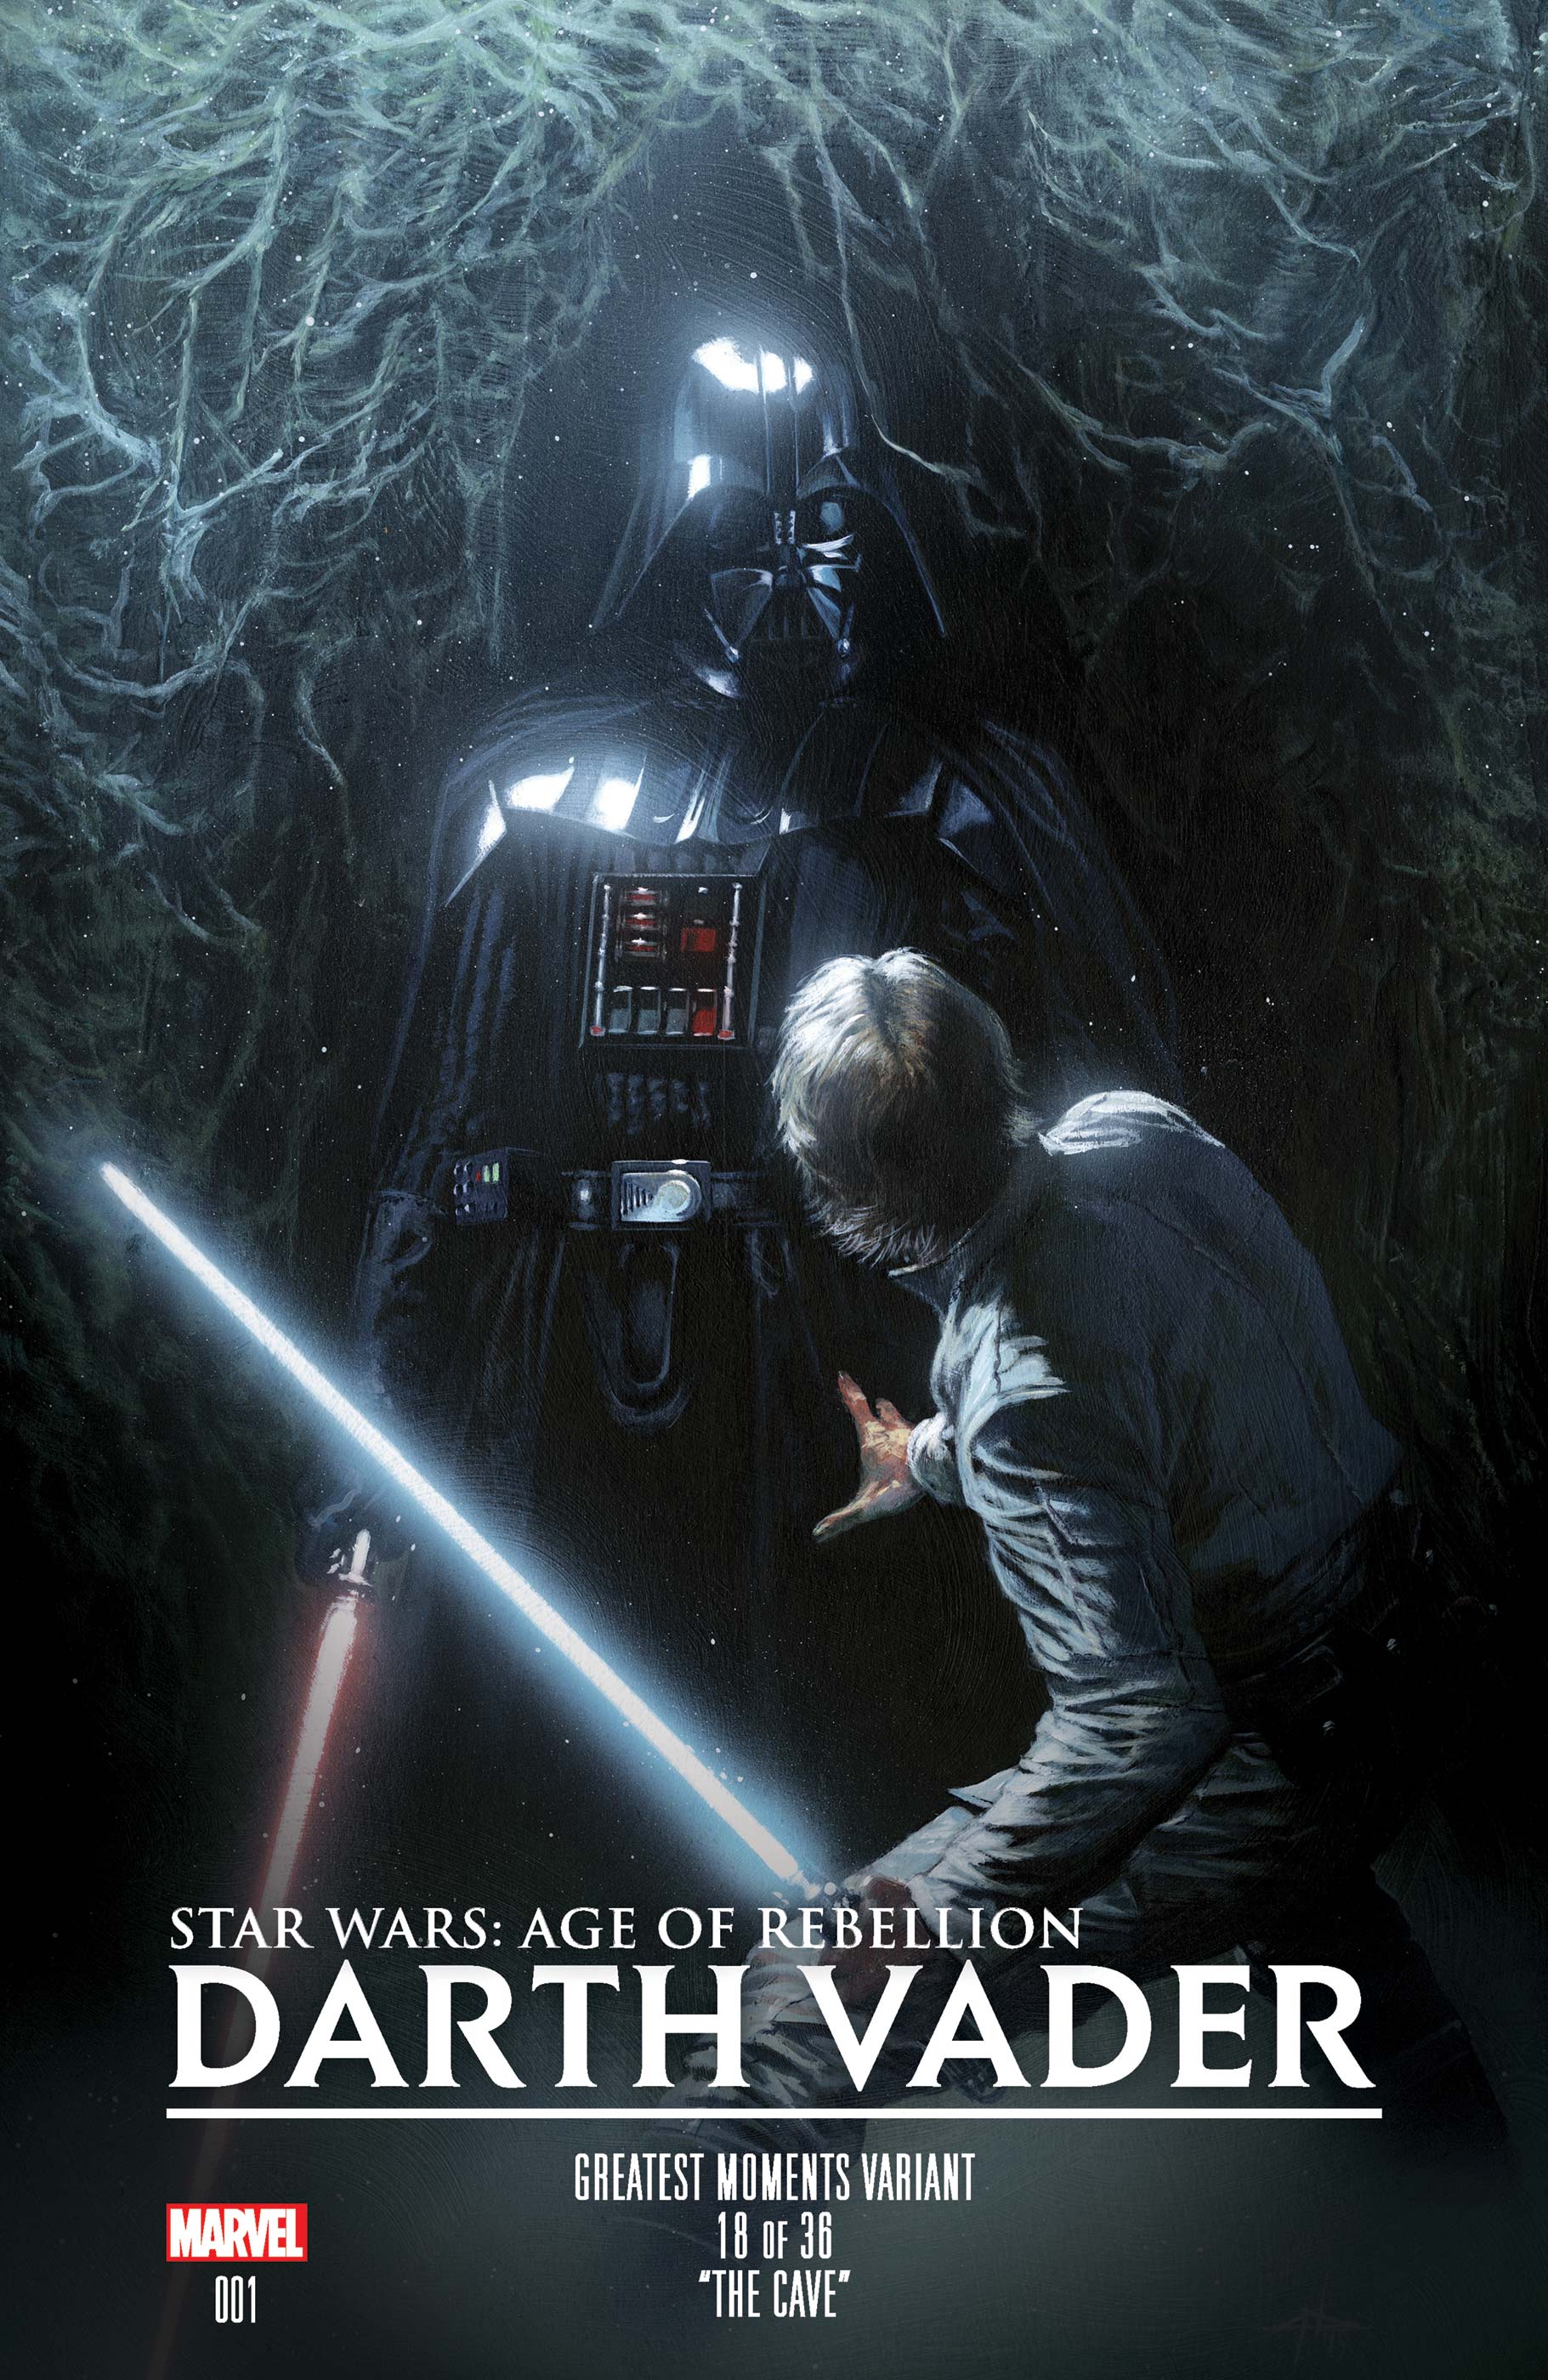 Star Wars: Age Of Rebellion - Darth Vader (2019) #1 (Variant)